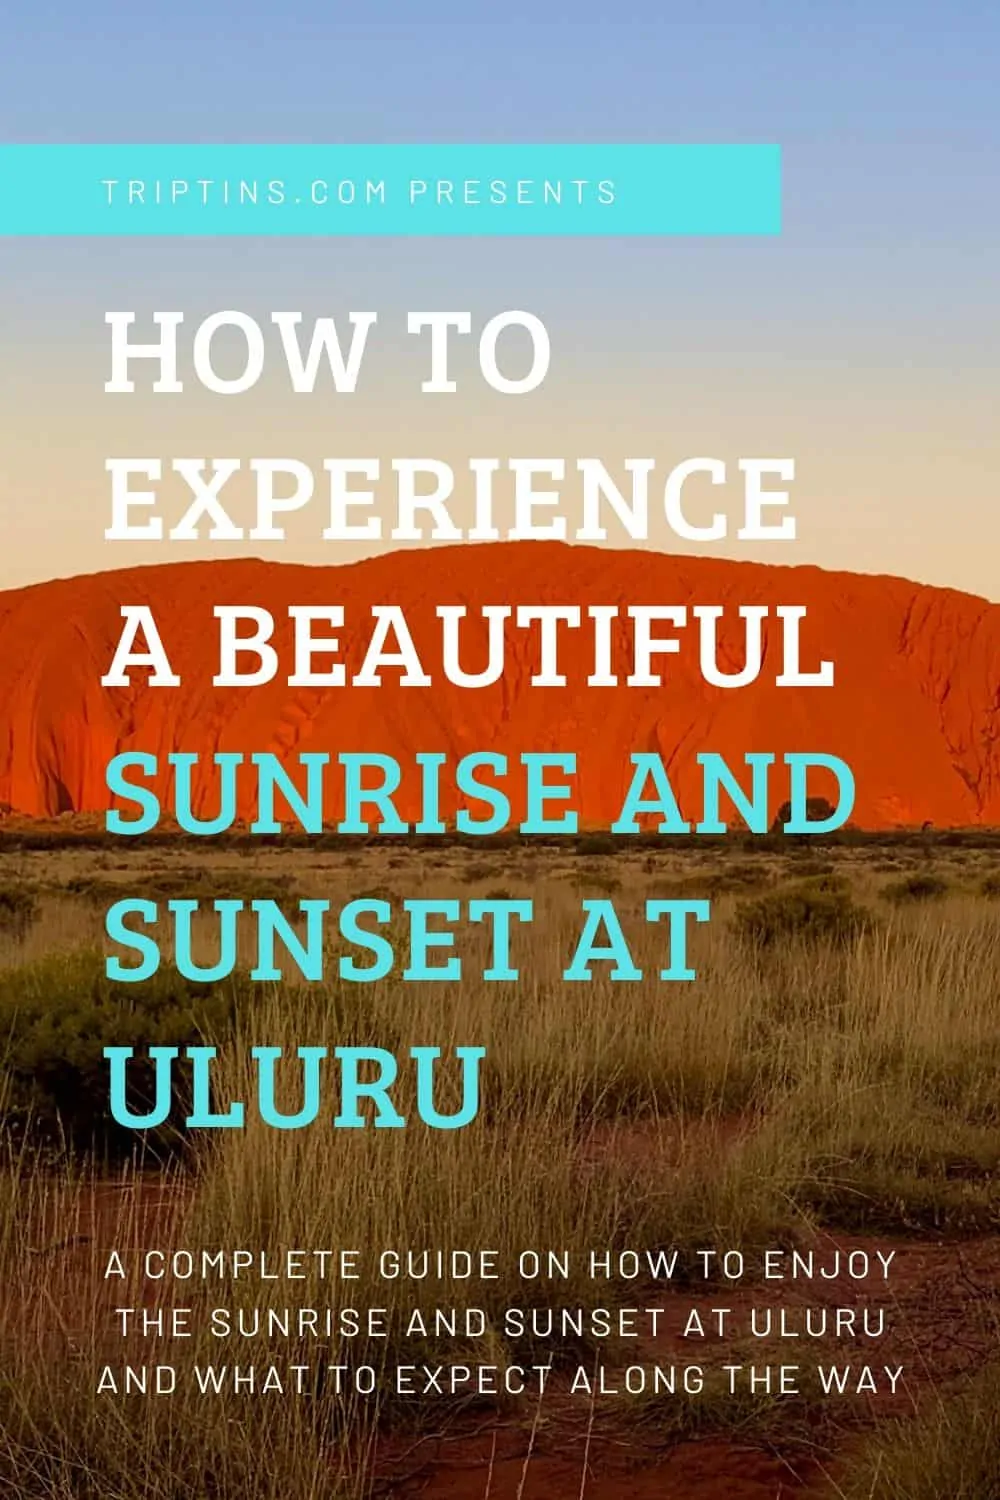 Uluru Sunset & Sunrise